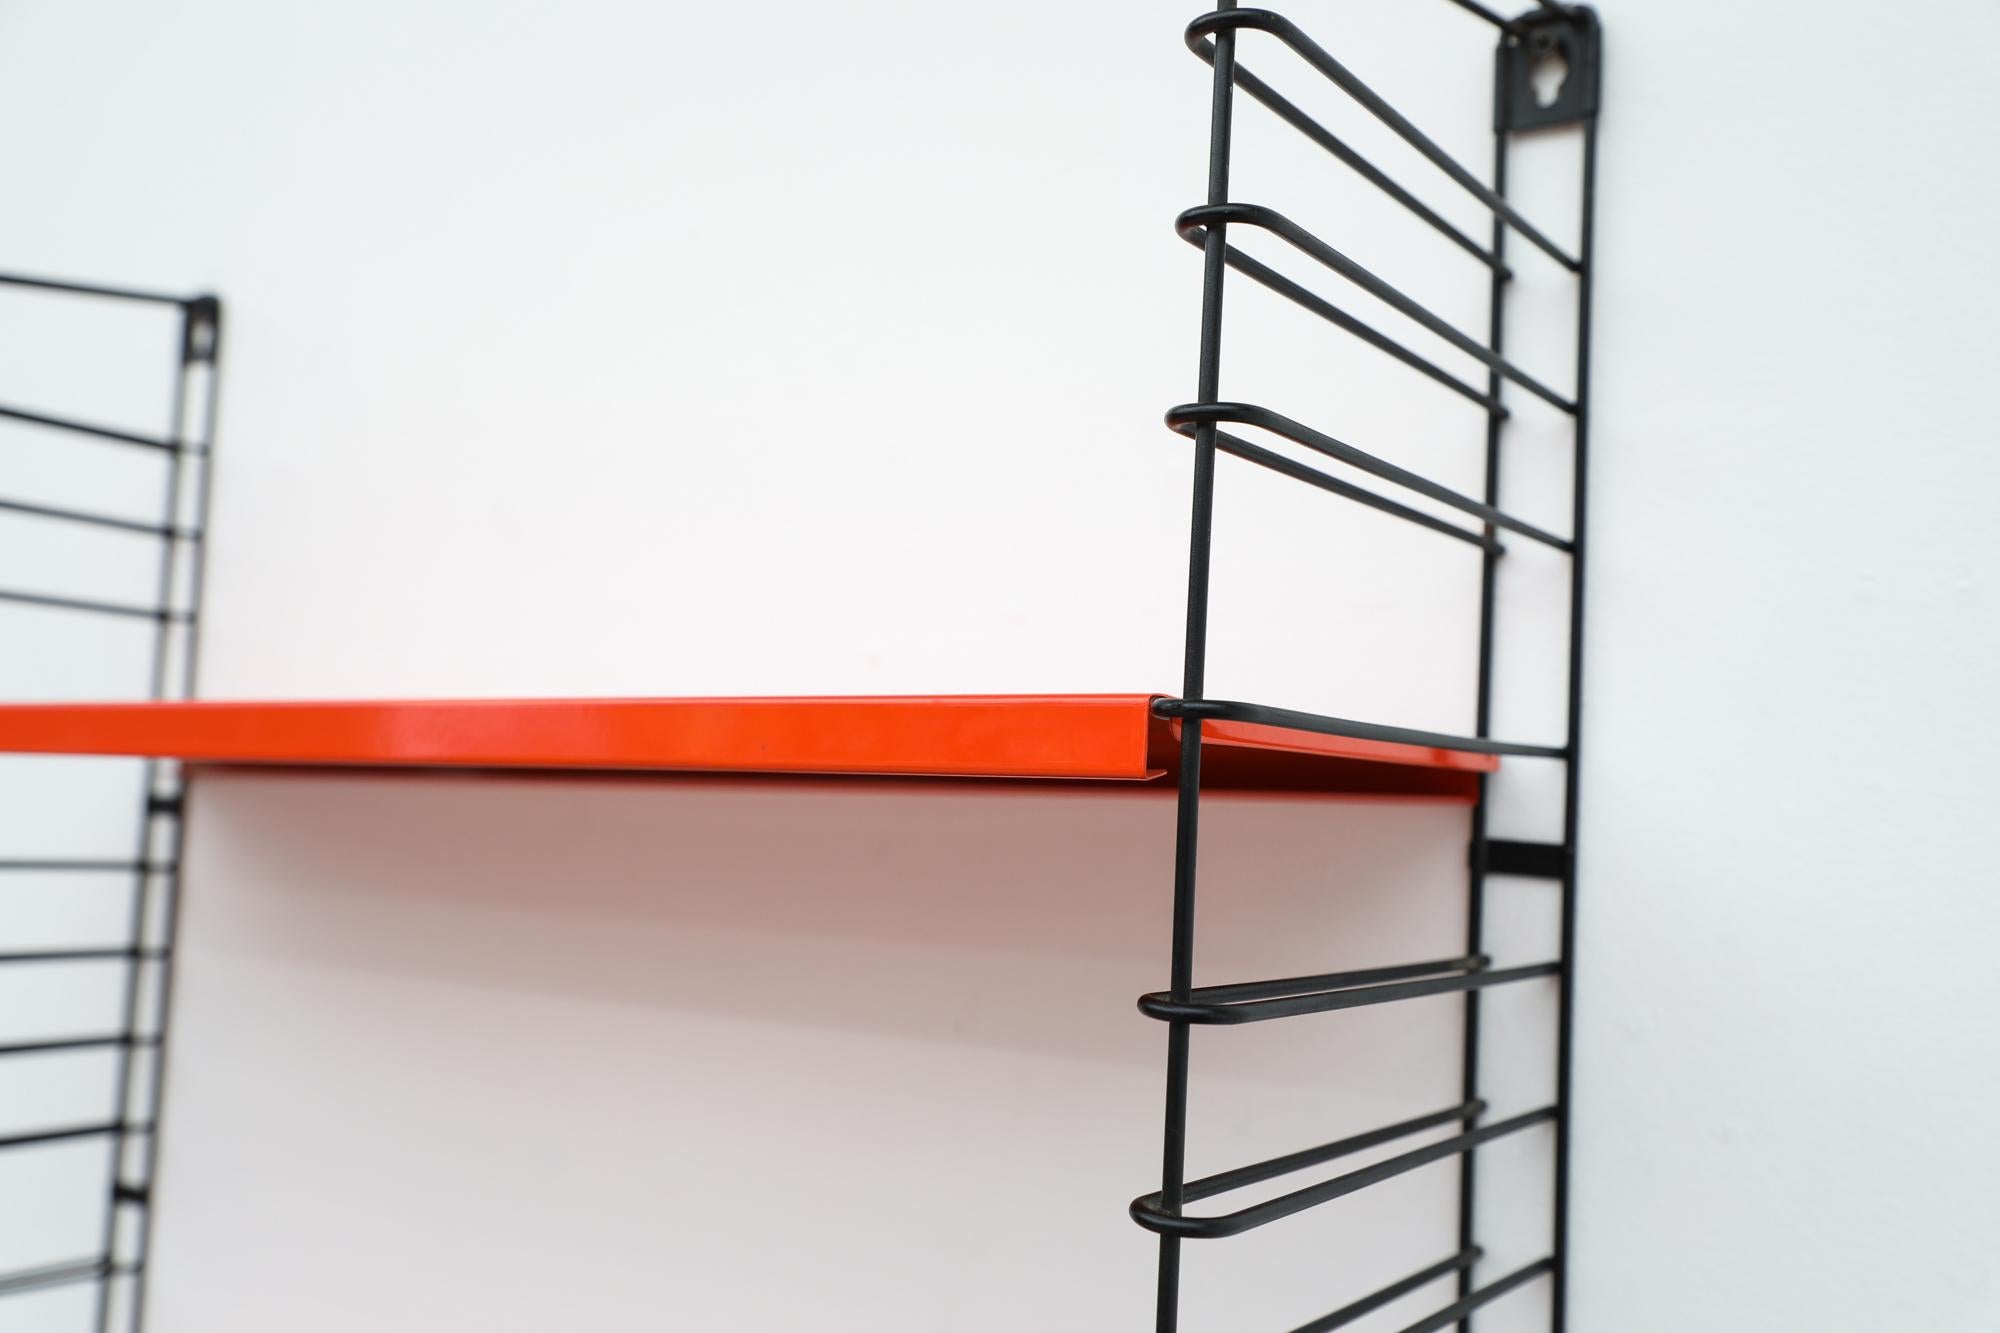 Enameled Midcentury Tomado Red and Orange Industrial Three Shelf Shelving Unit